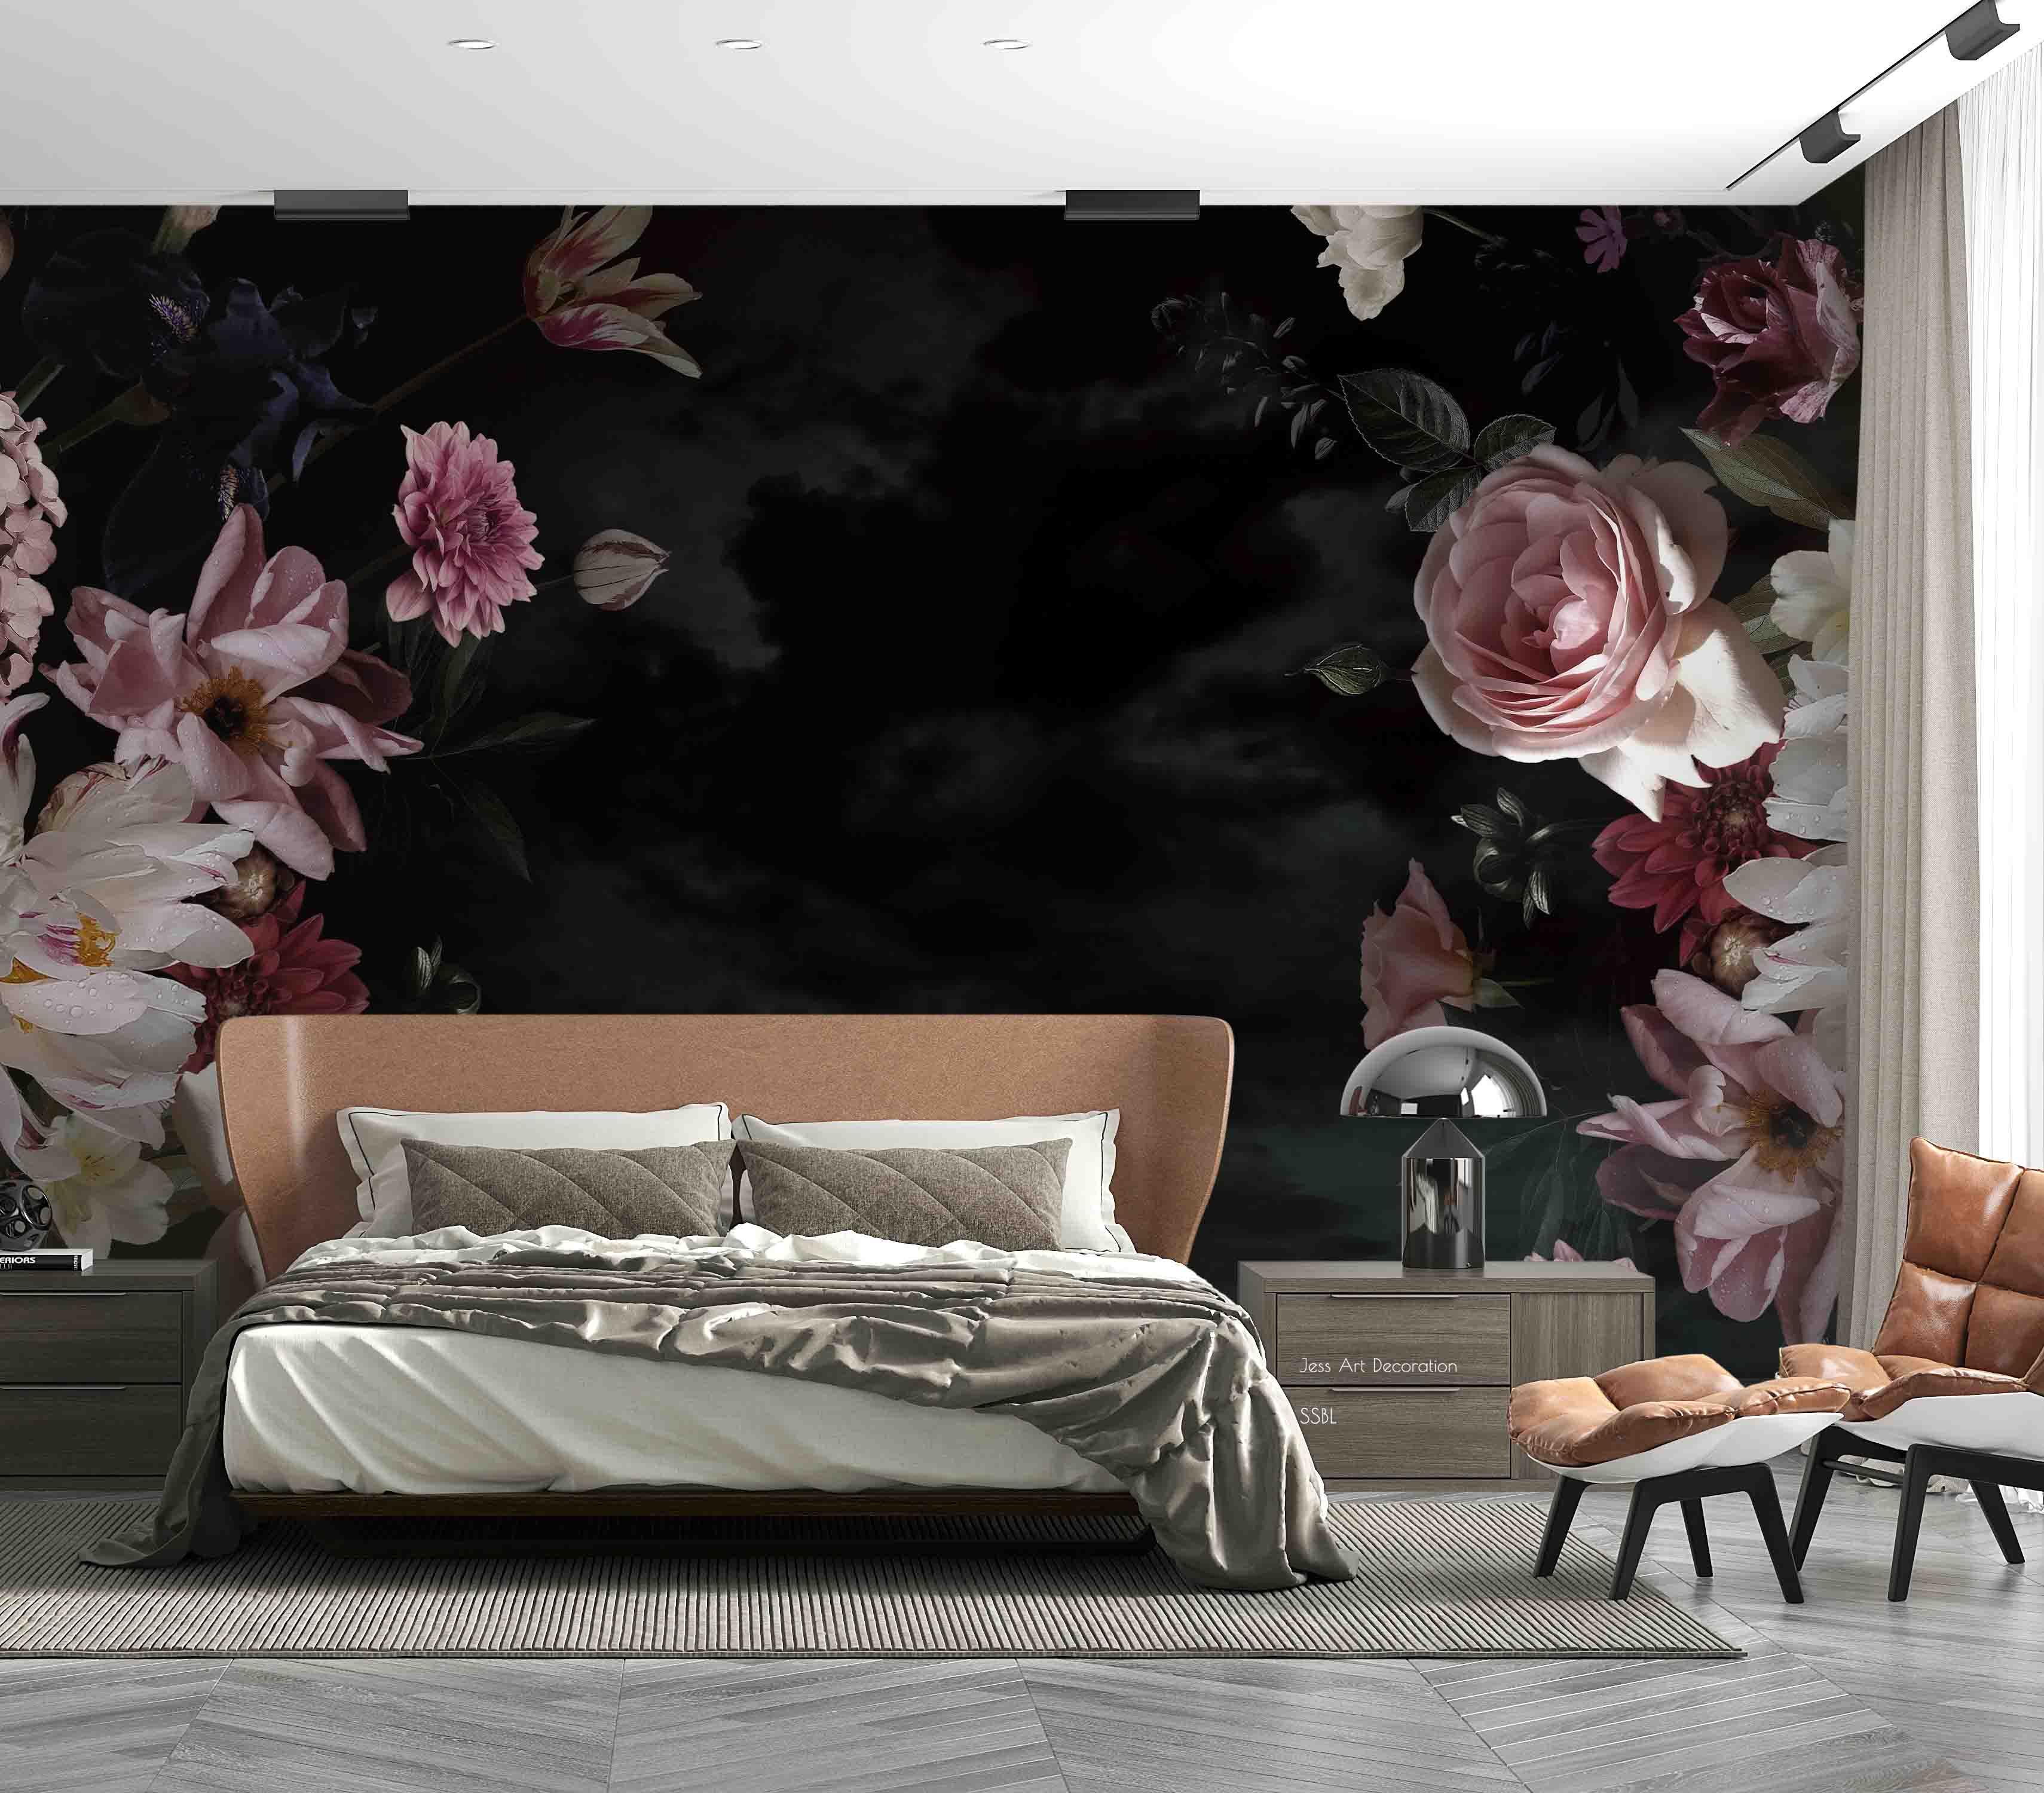 3D Vintage Baroque Art Peony Border Black Background Wall Mural Wallpaper GD 3582- Jess Art Decoration